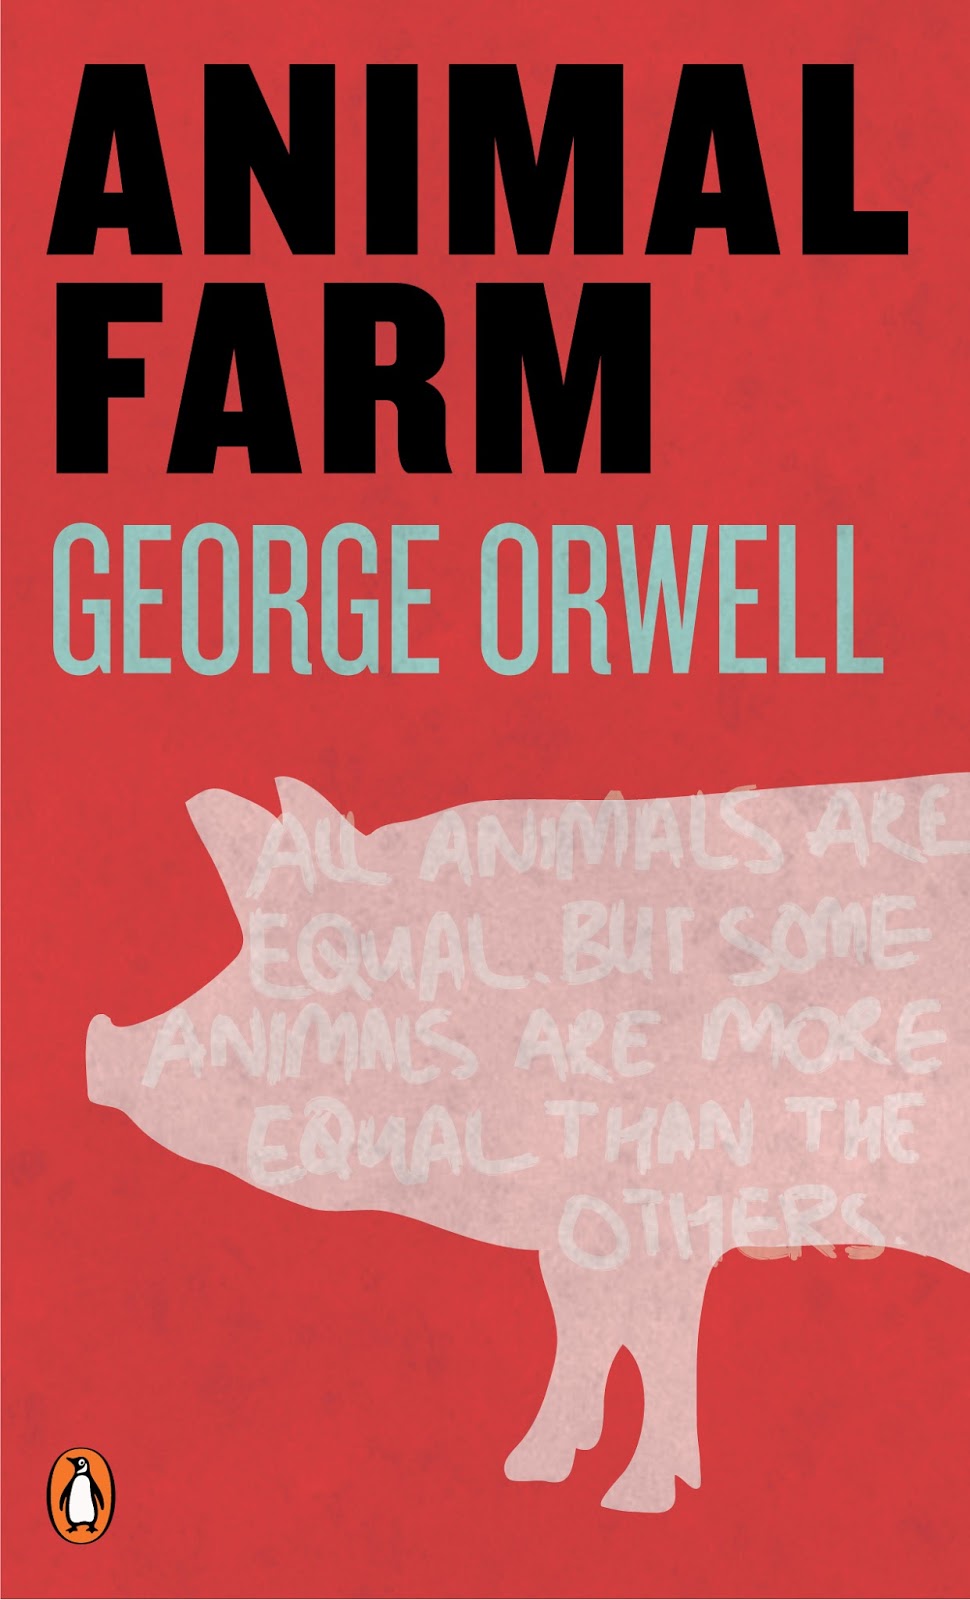 book reviews on animal farm